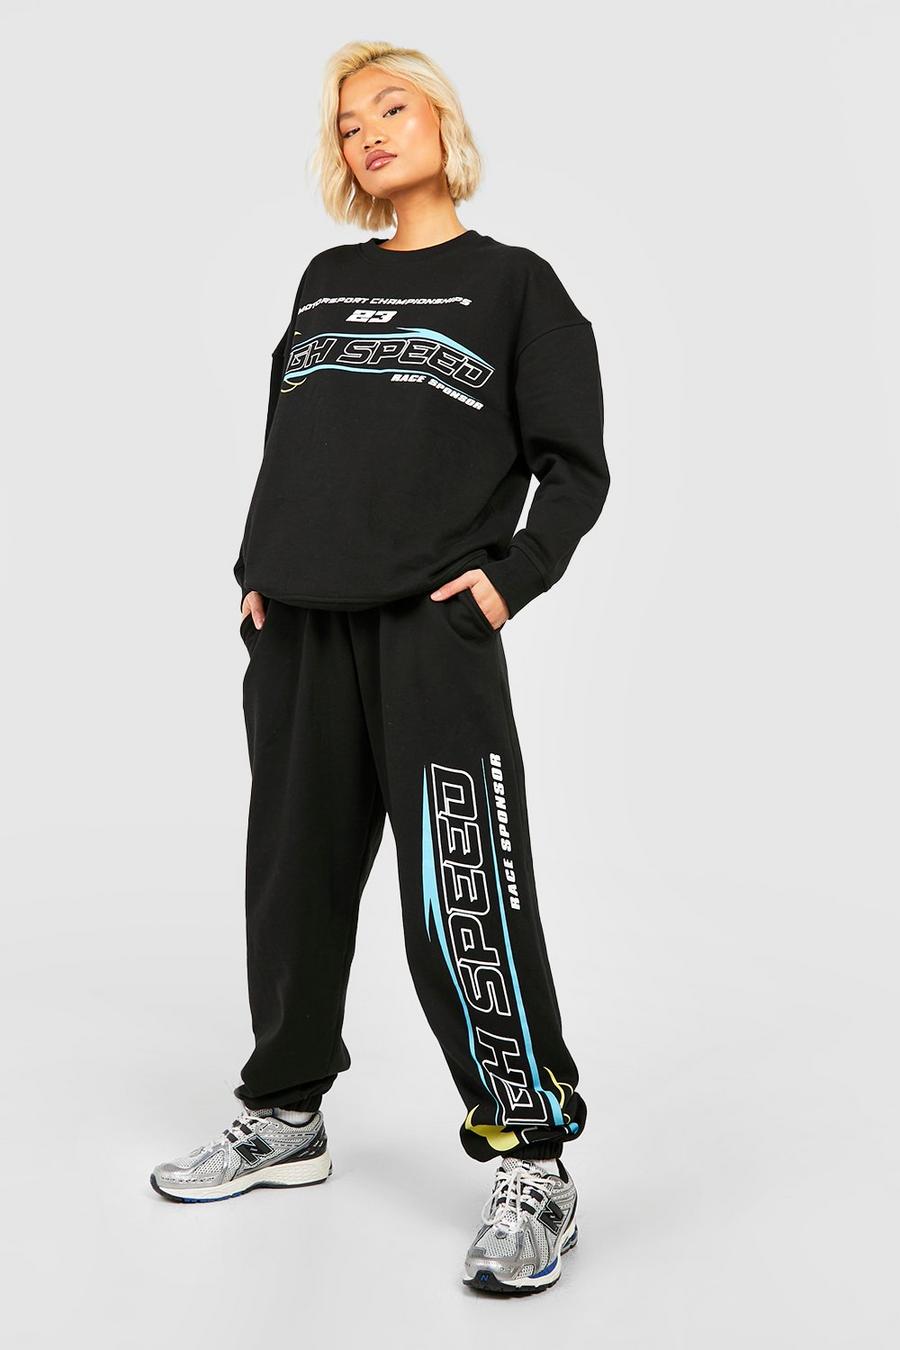 Sweatshirt-Trainingsanzug mit Motorcross-Slogan, Black